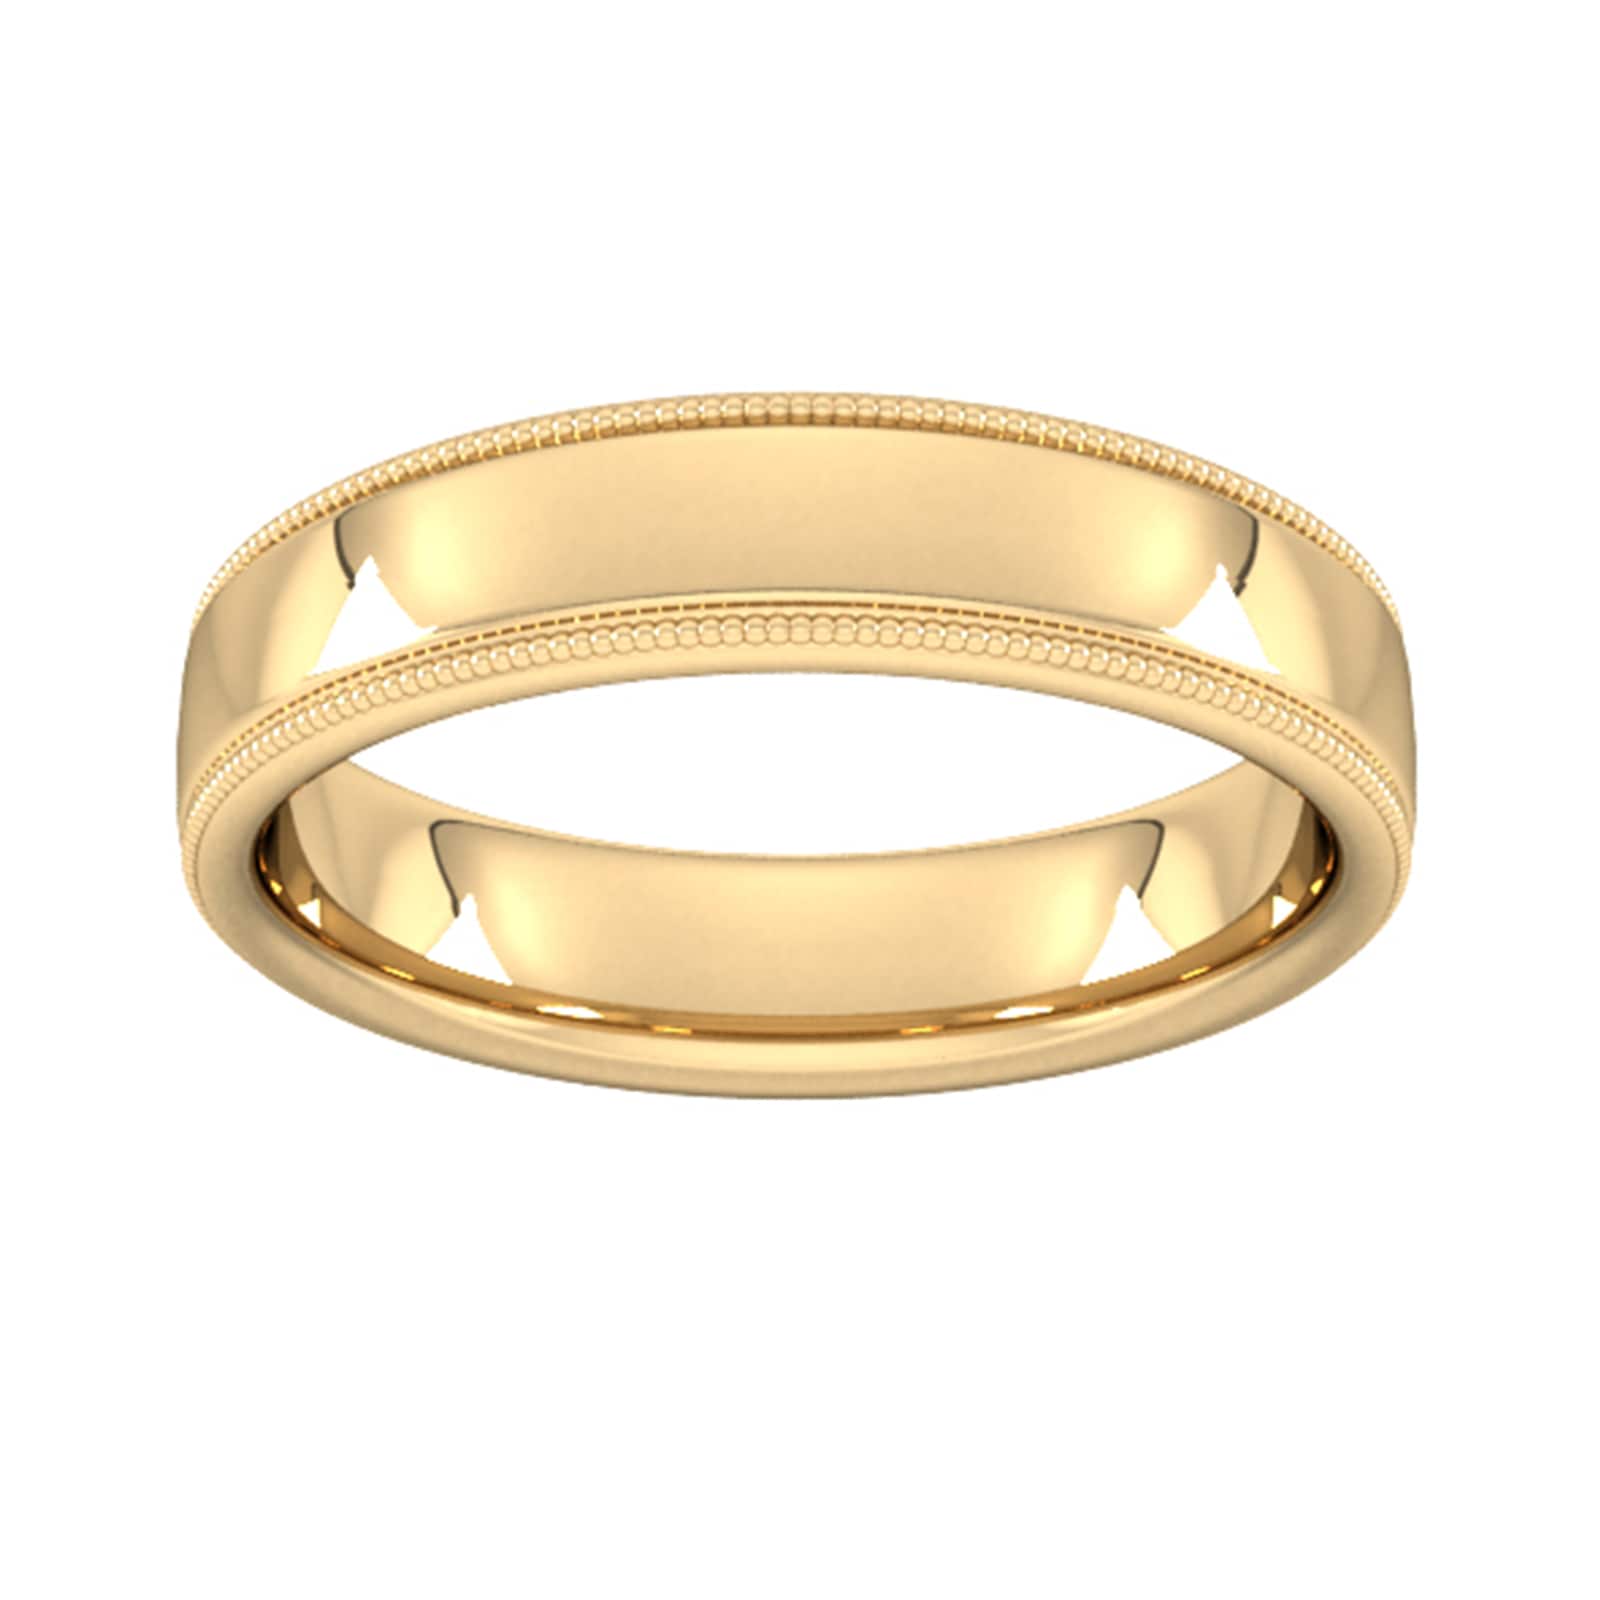 5mm Slight Court Extra Heavy Milgrain Edge Wedding Ring In 9 Carat Yellow Gold - Ring Size P